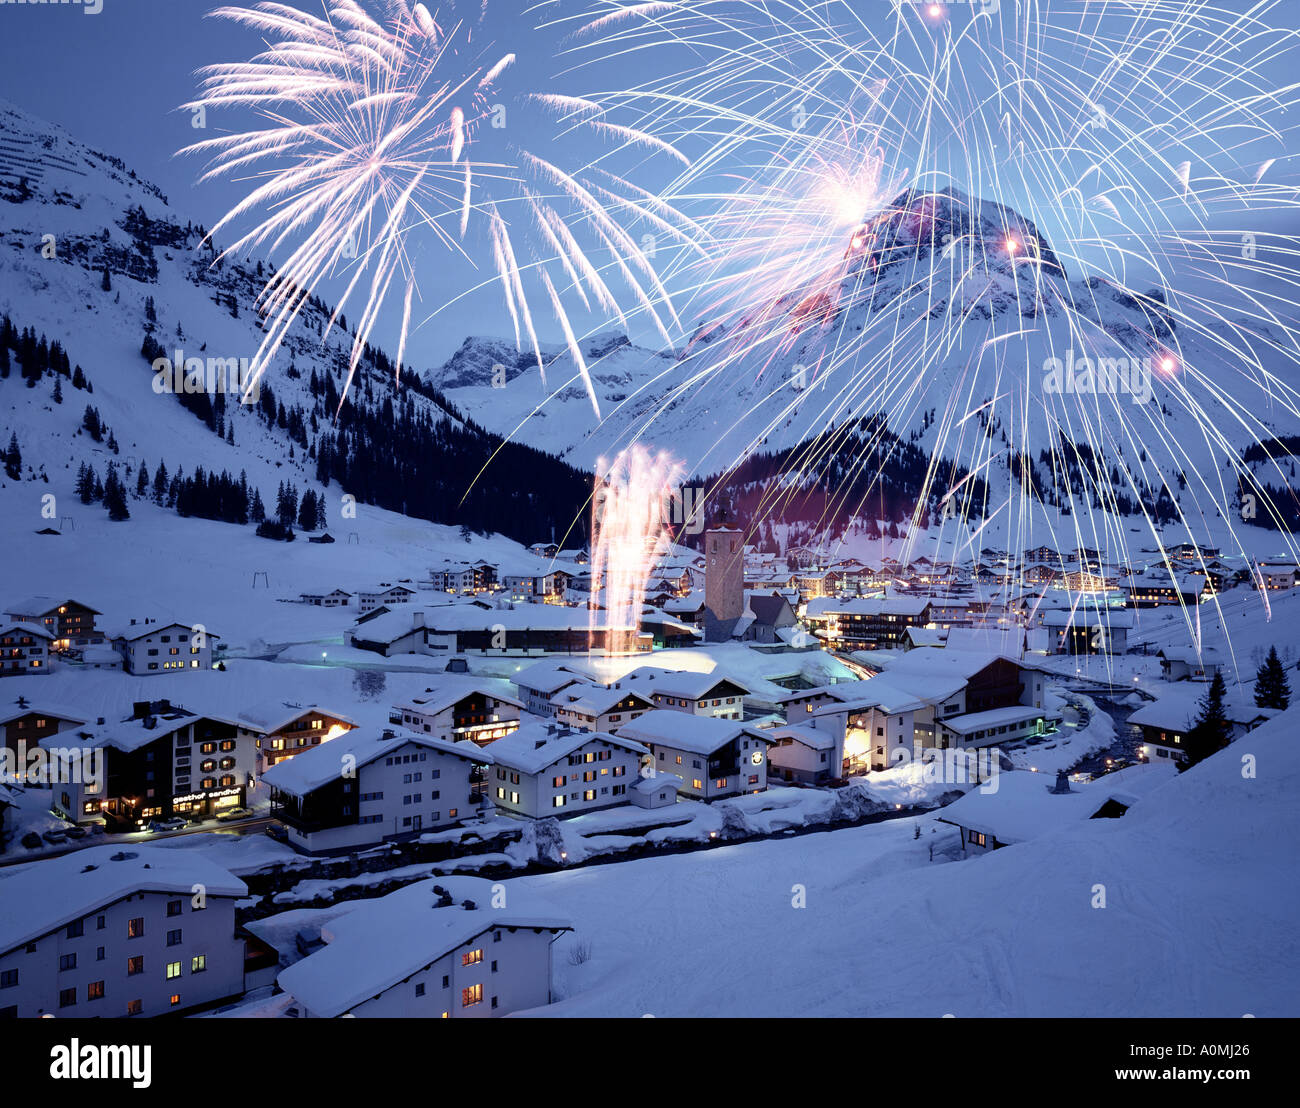 AT - VORARLBERG: Silvesterfeiern in Lech am Arlberg Stockfoto